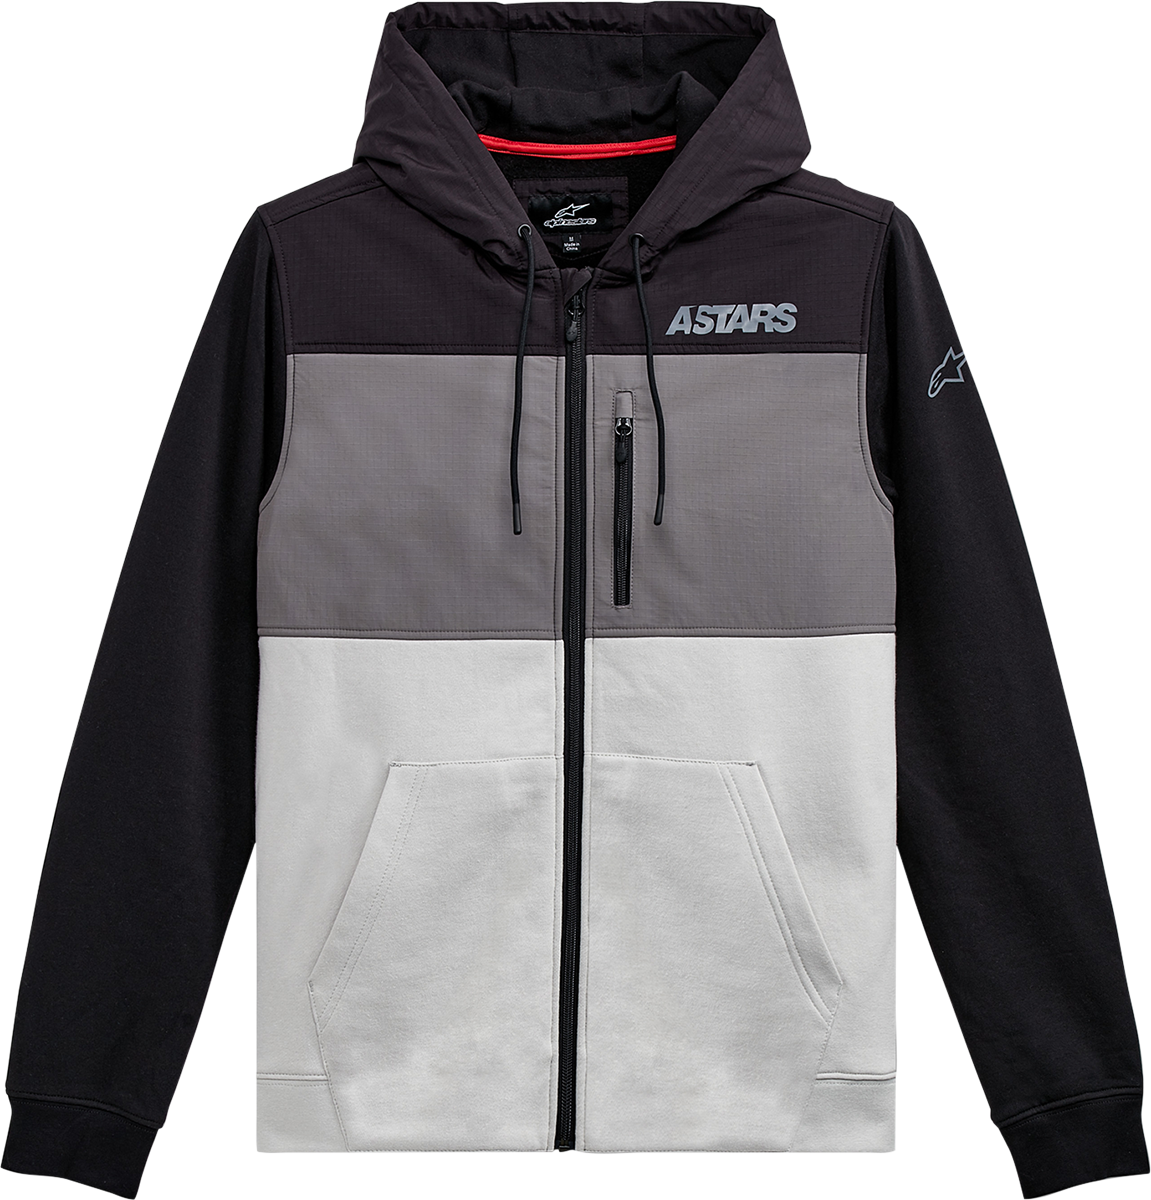 ALPINESTARS Elevate Jacket - Black/Silver - 2XL 12121120019002X